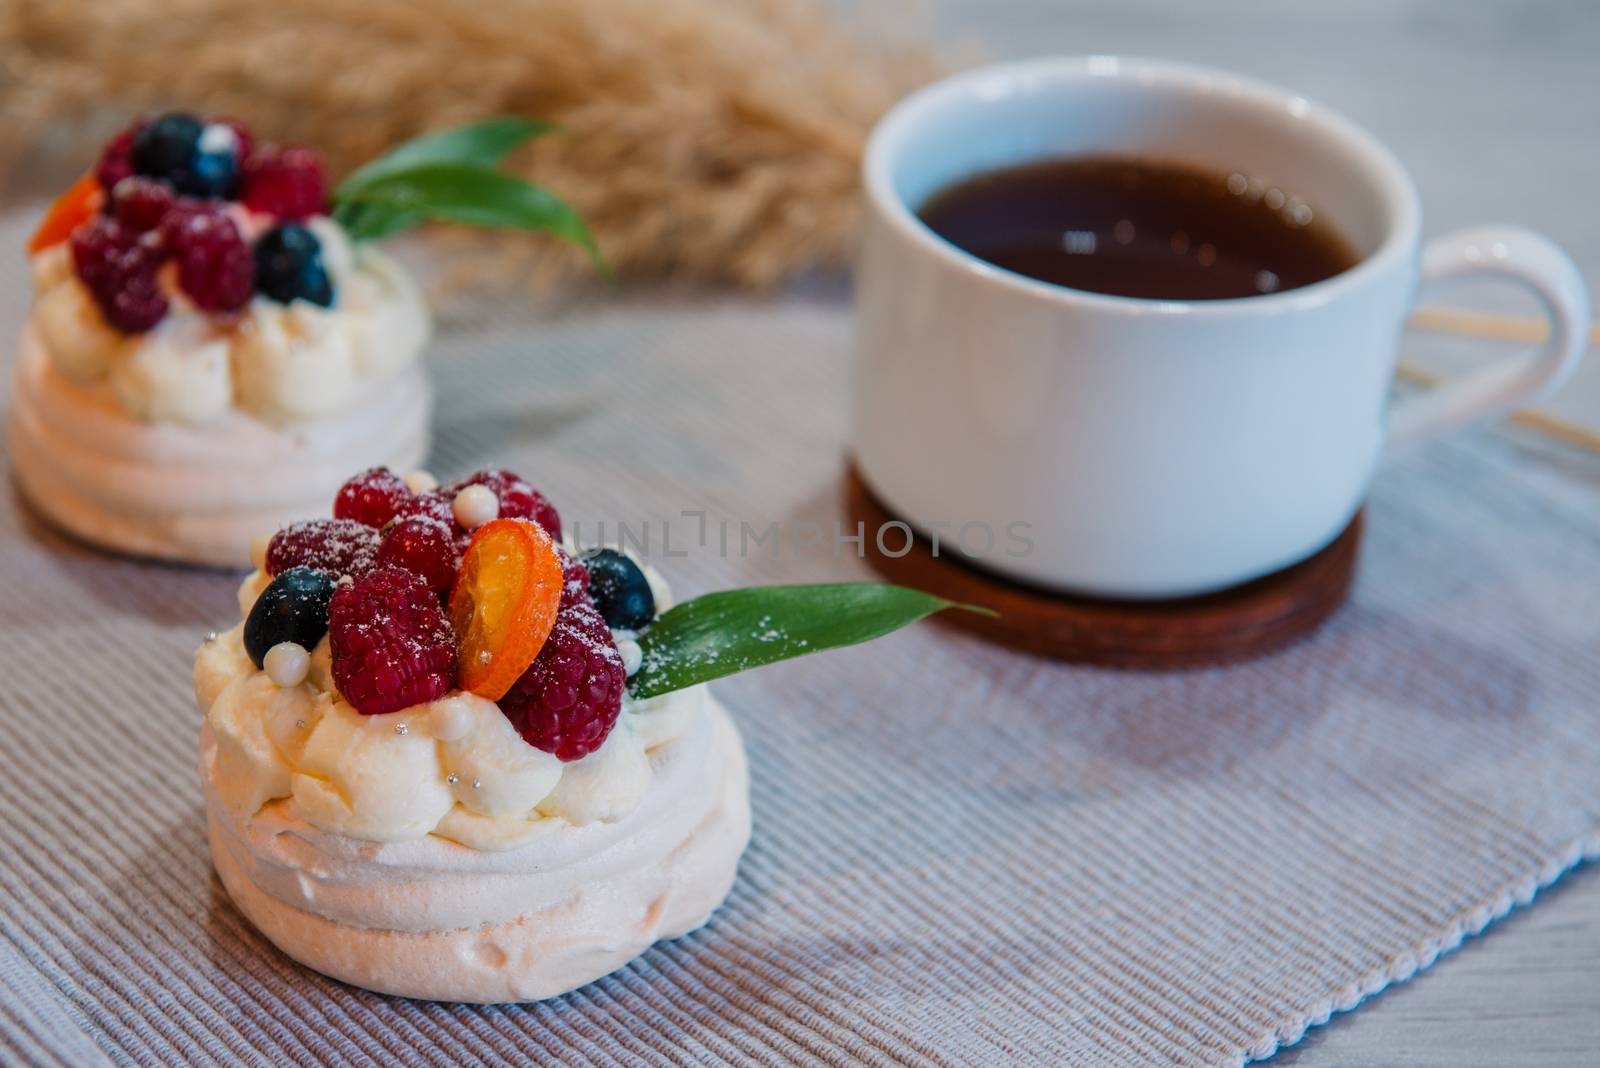 Pavlova meringue cake with cream and small fruits by marynkin